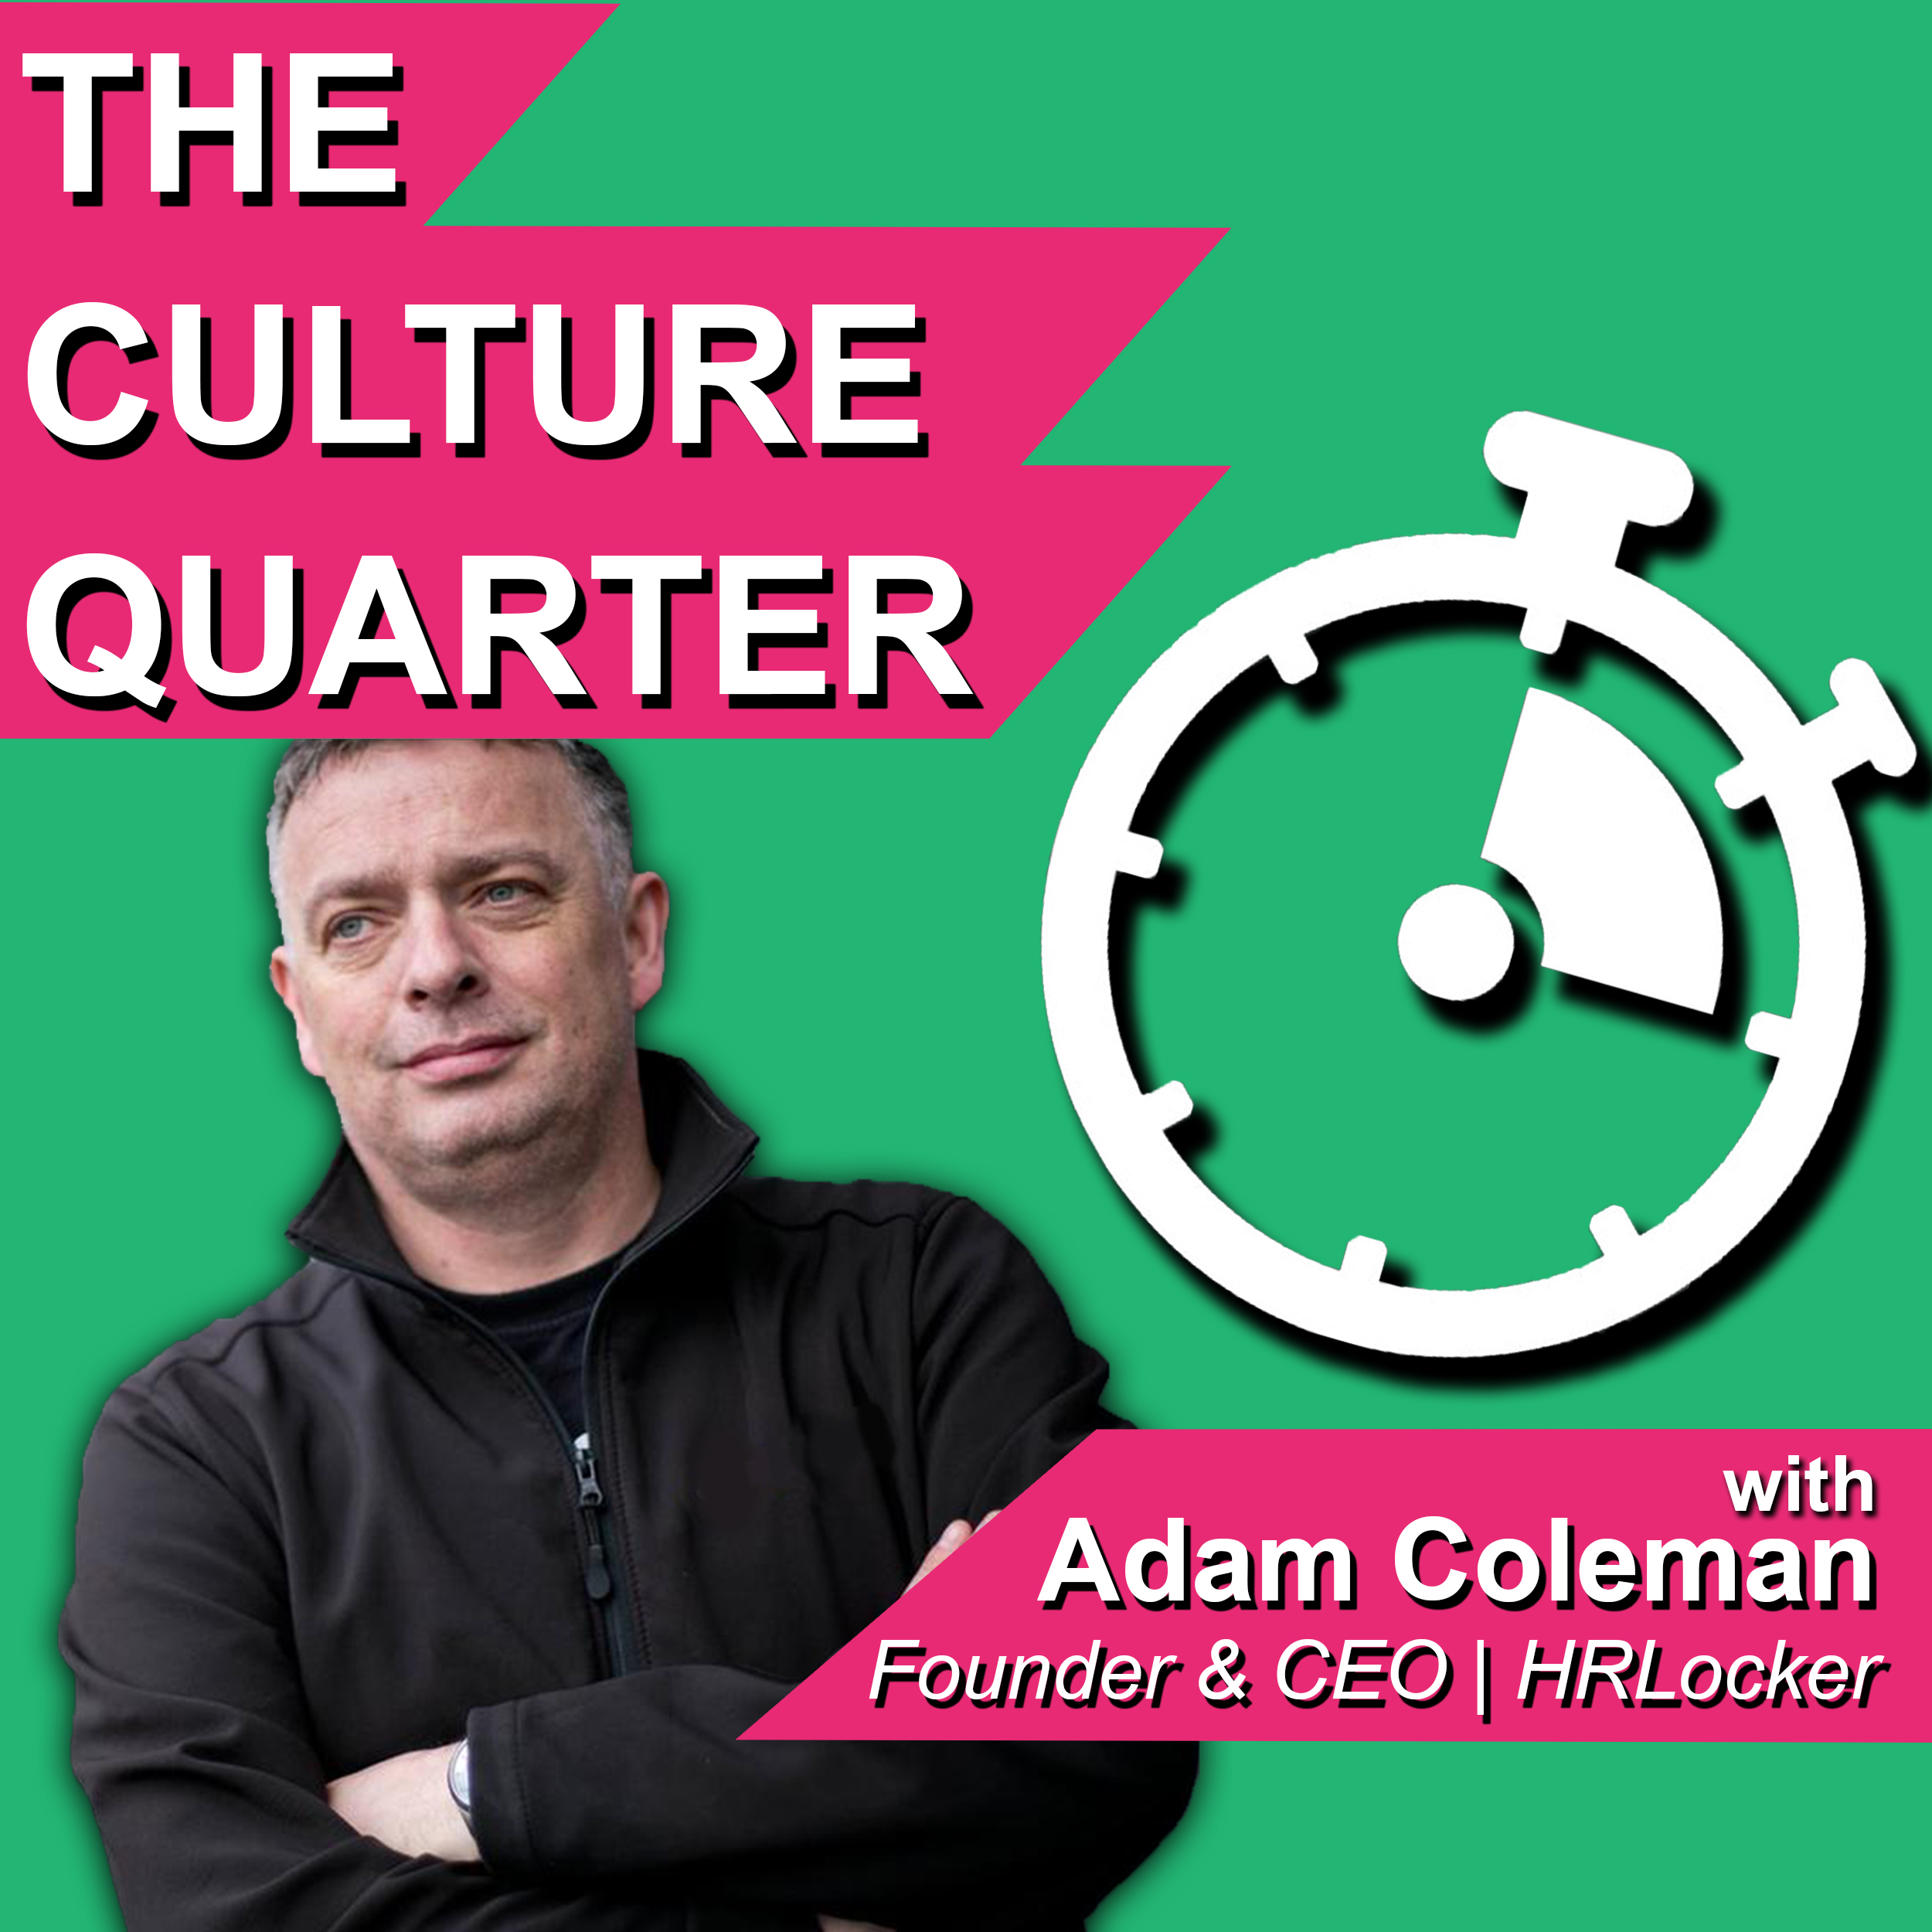 The Culture Quarter with Adam Coleman